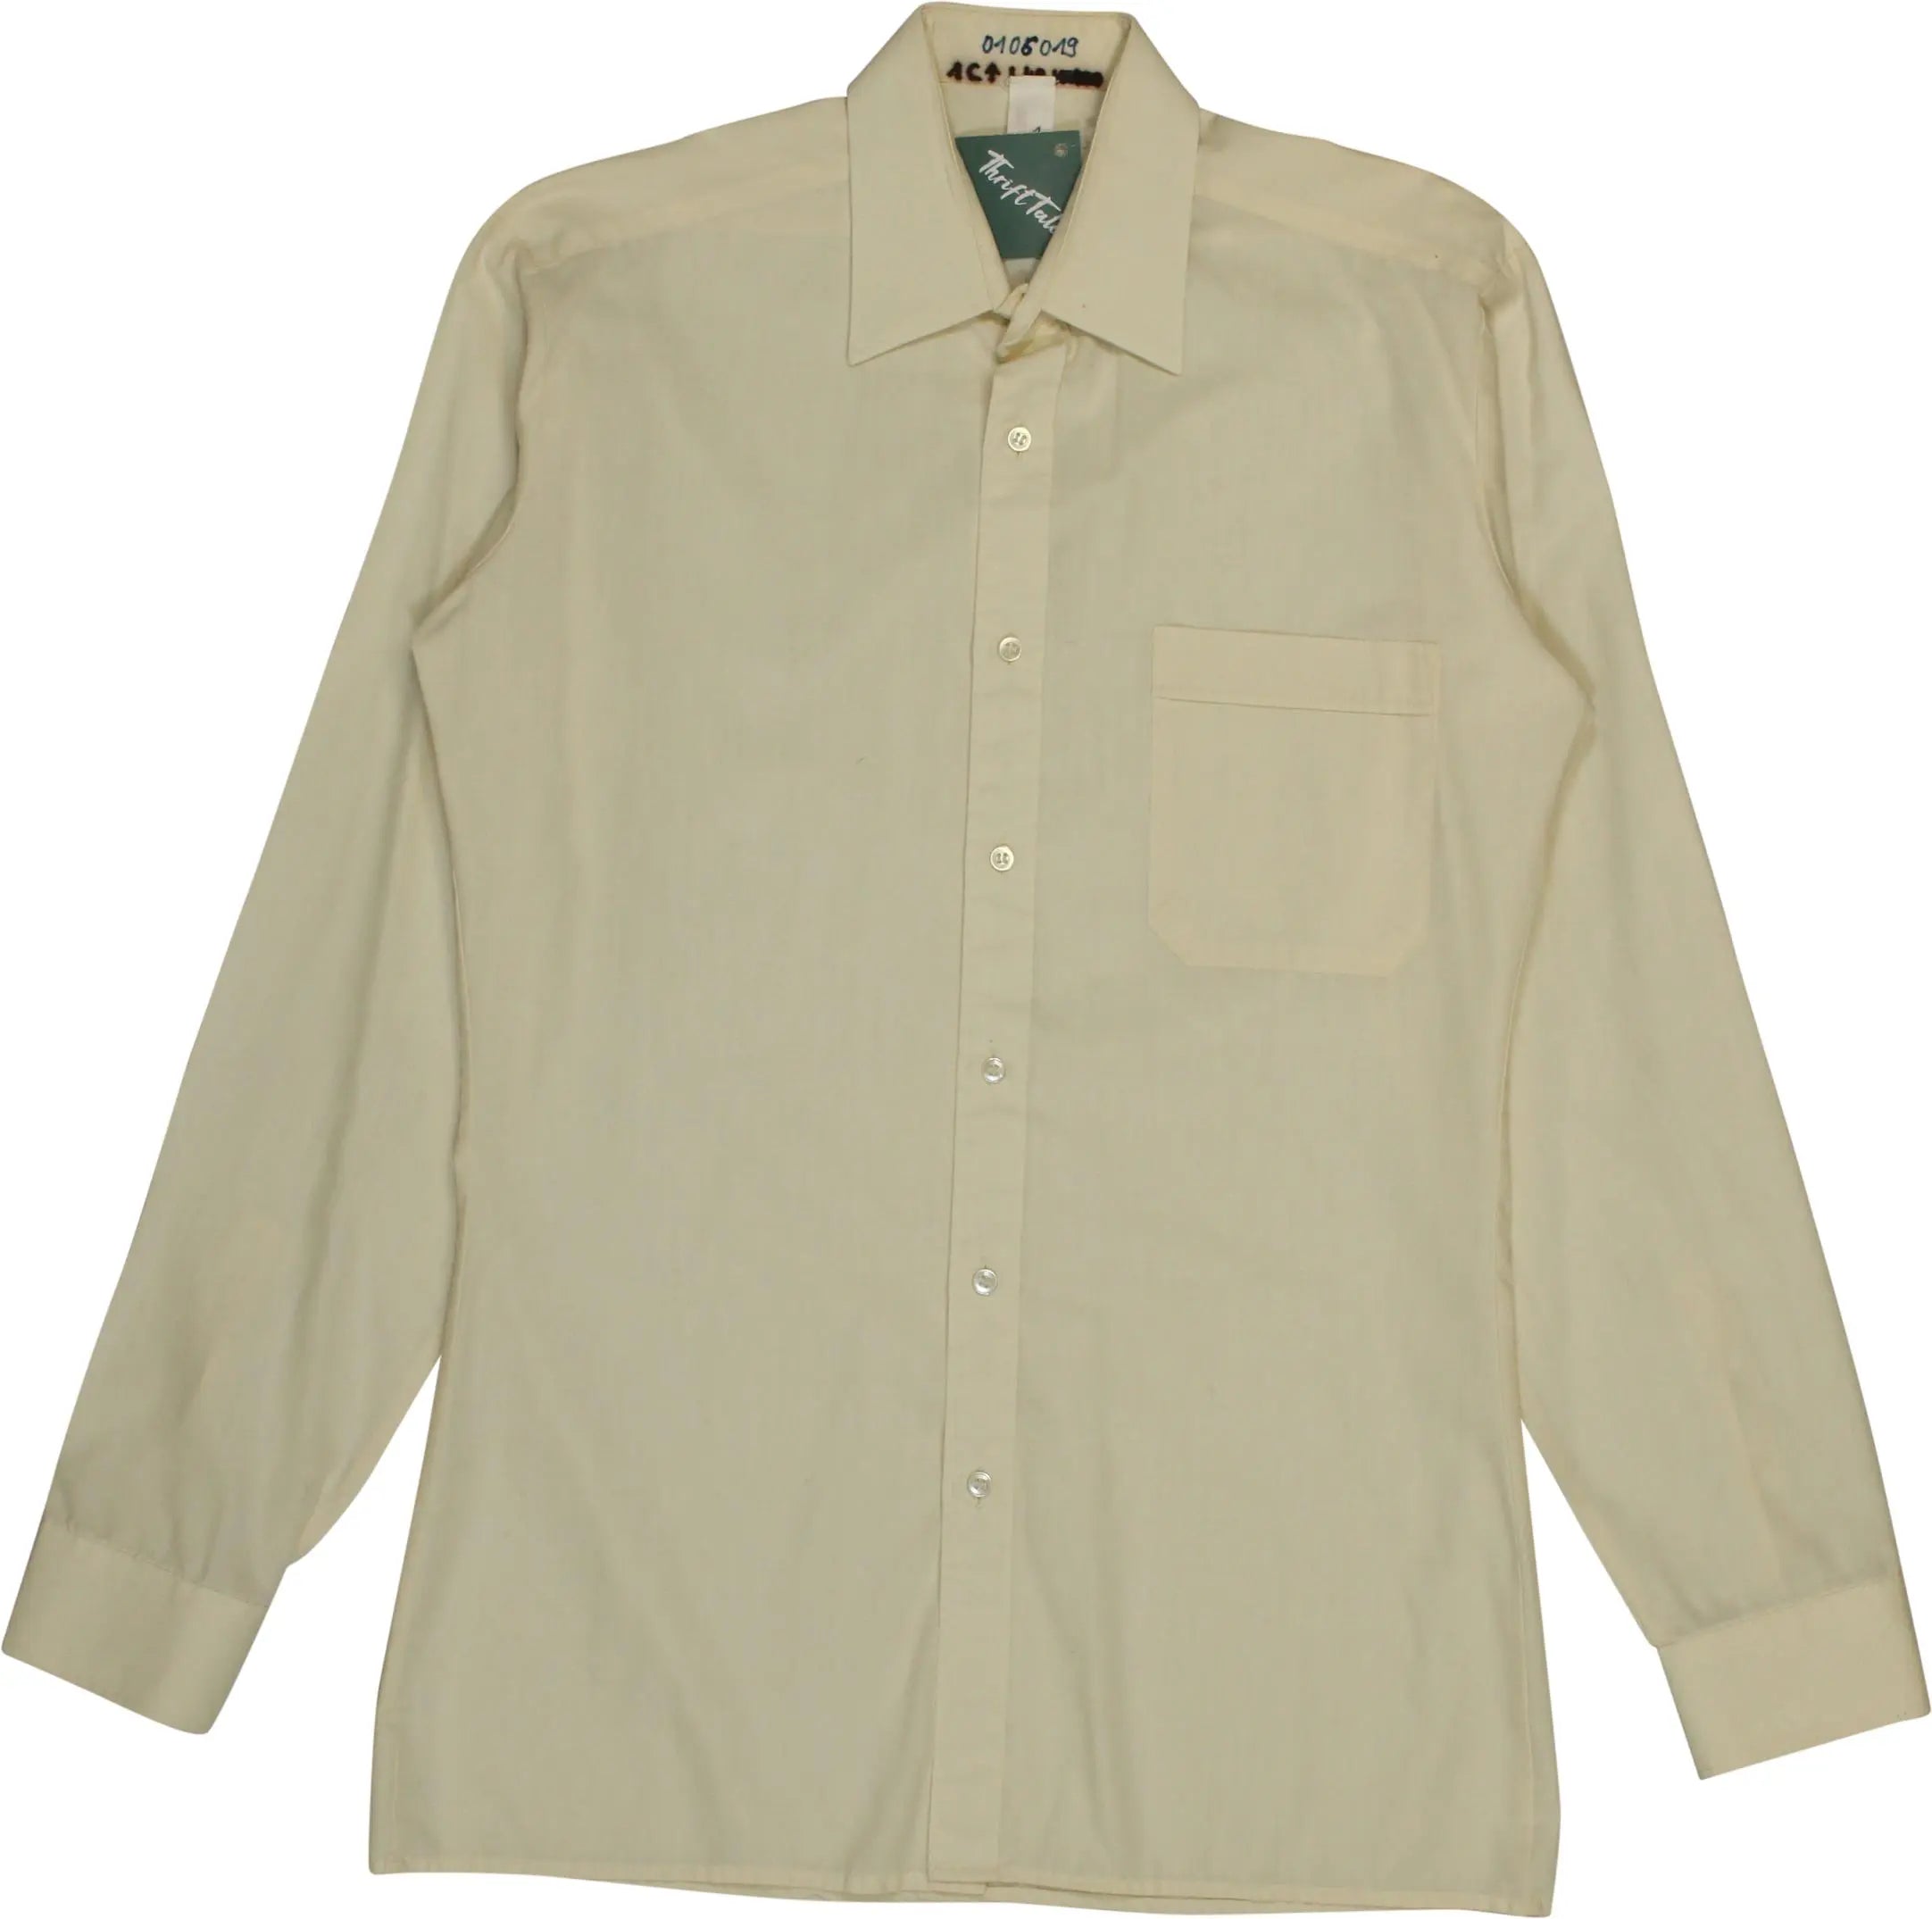 DeSigner's - 90s Beige Shirt- ThriftTale.com - Vintage and second handclothing